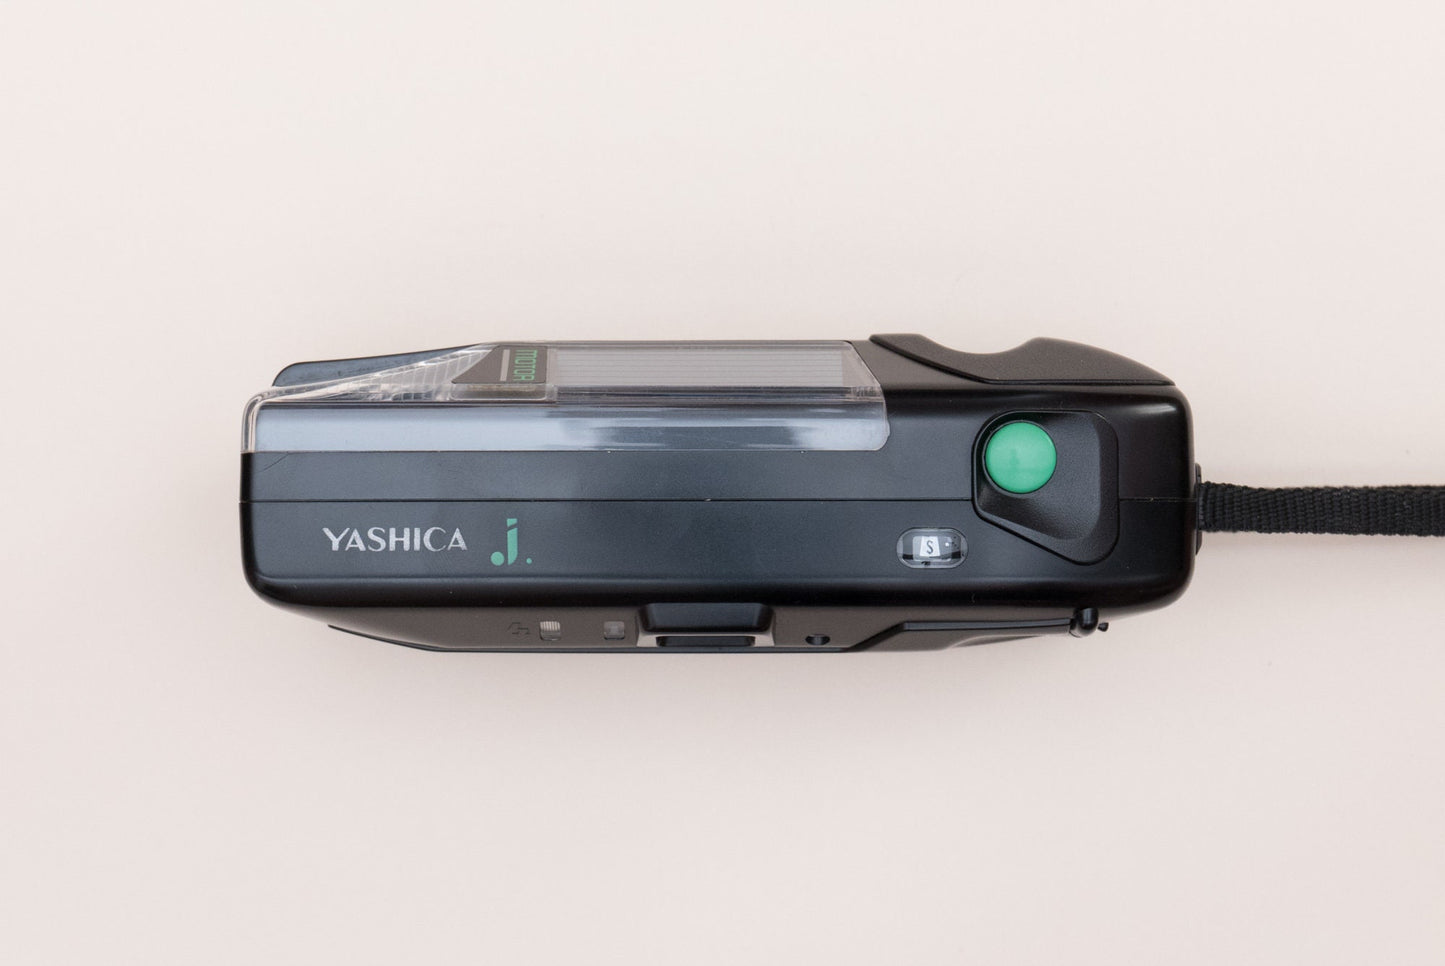 Yashica J Motor Kyocera 35mm Compact Film Camera